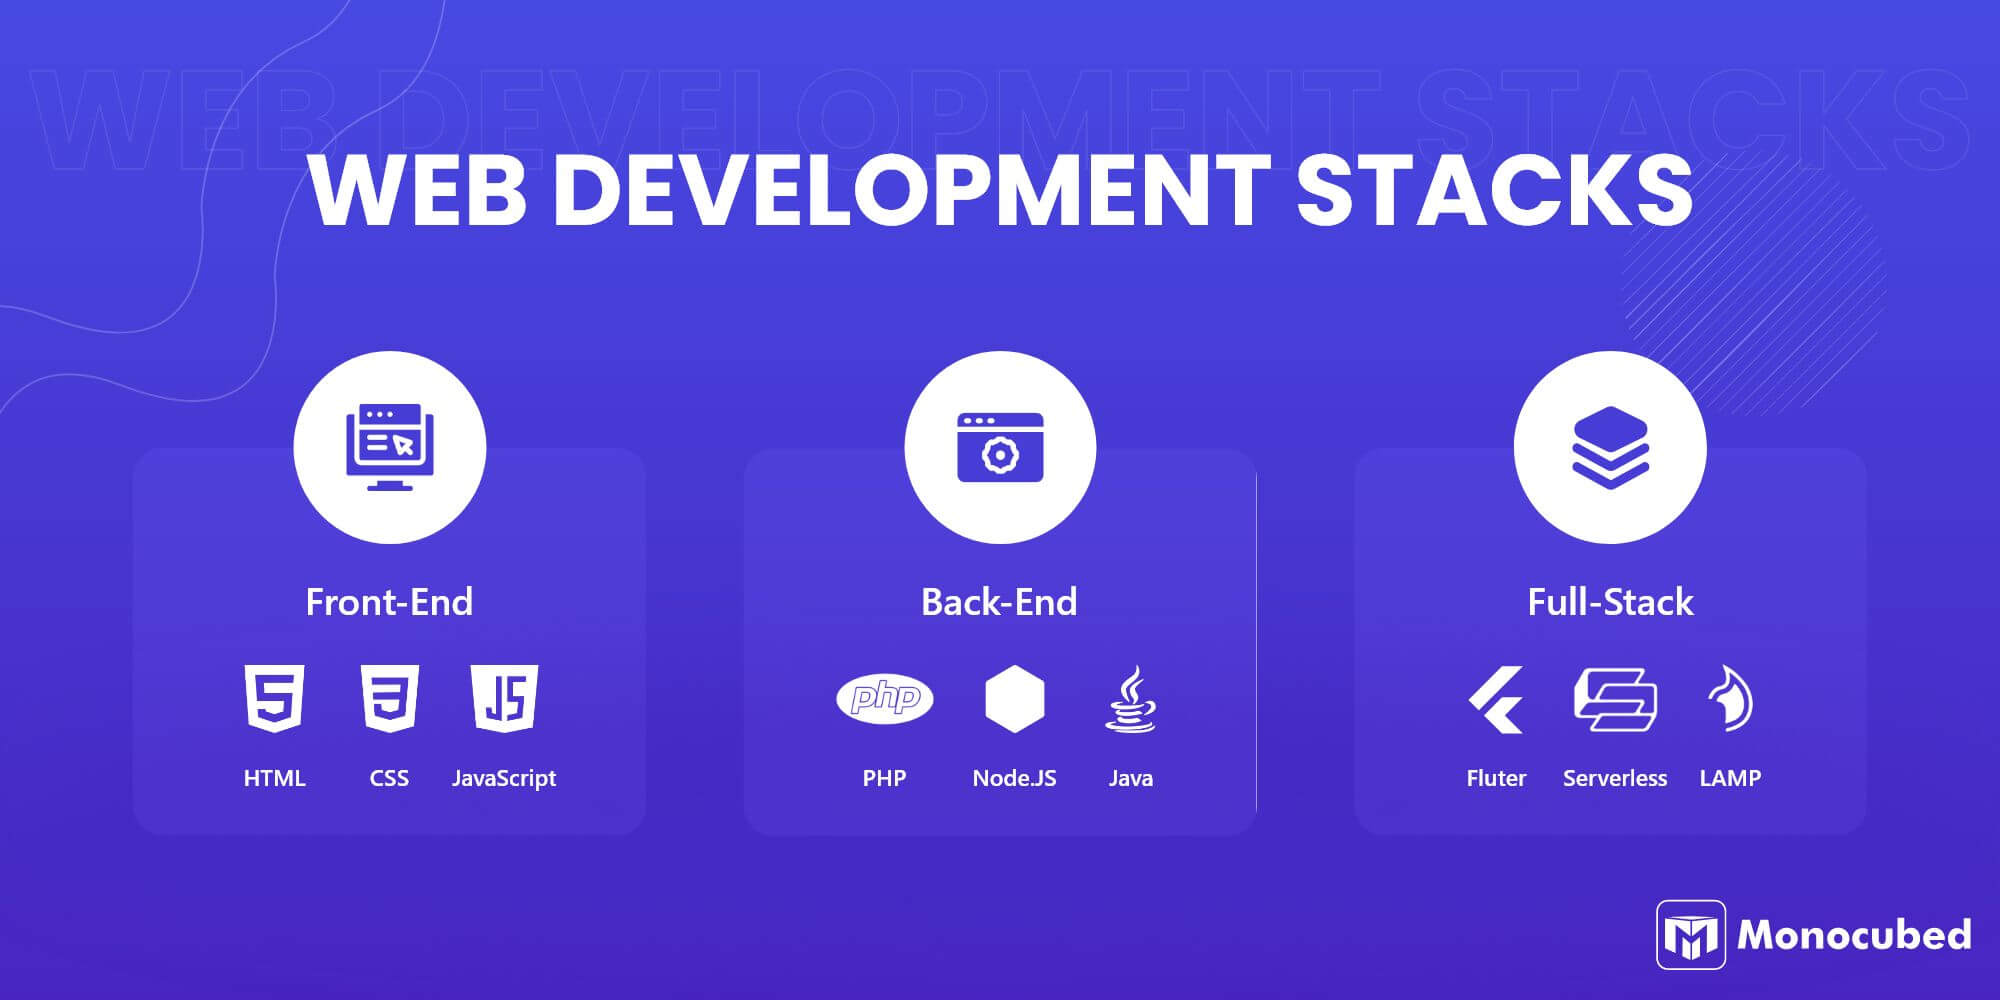 Top Web Development Stacks to Build a Web Application